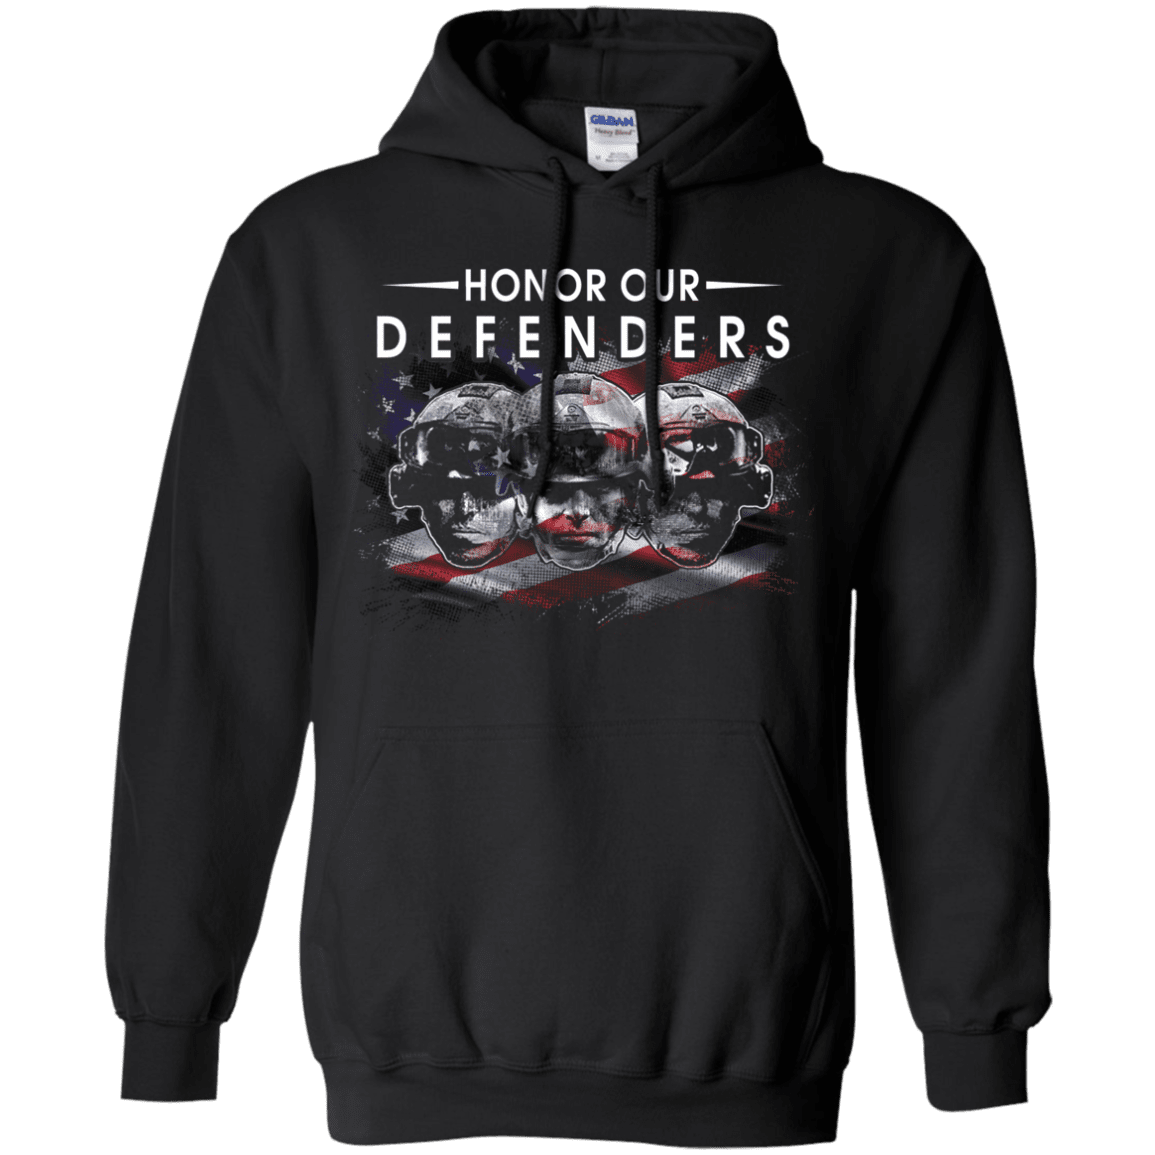 Military T-Shirt "HONOR OUR DEFENDER"-TShirt-General-Veterans Nation